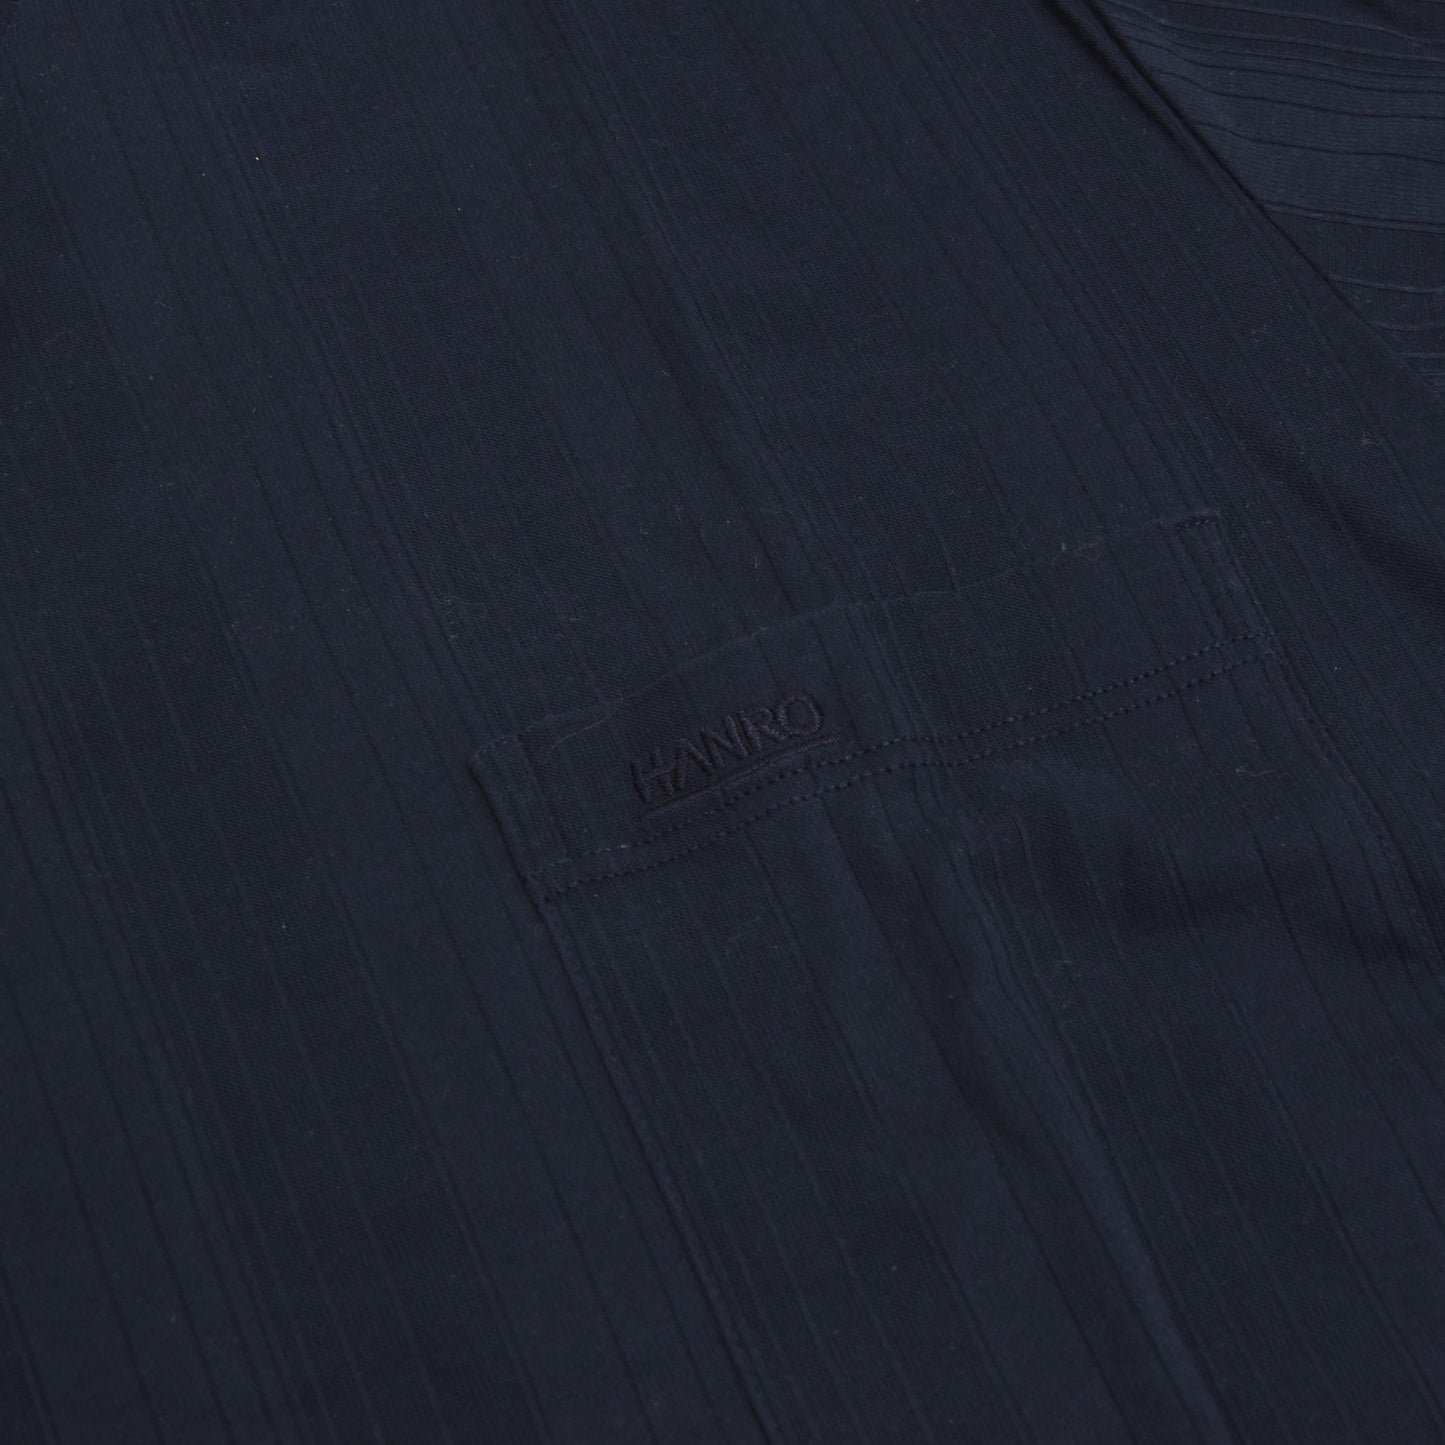 Hanro of Switzerland Pyjamas Size M - Navy/Black